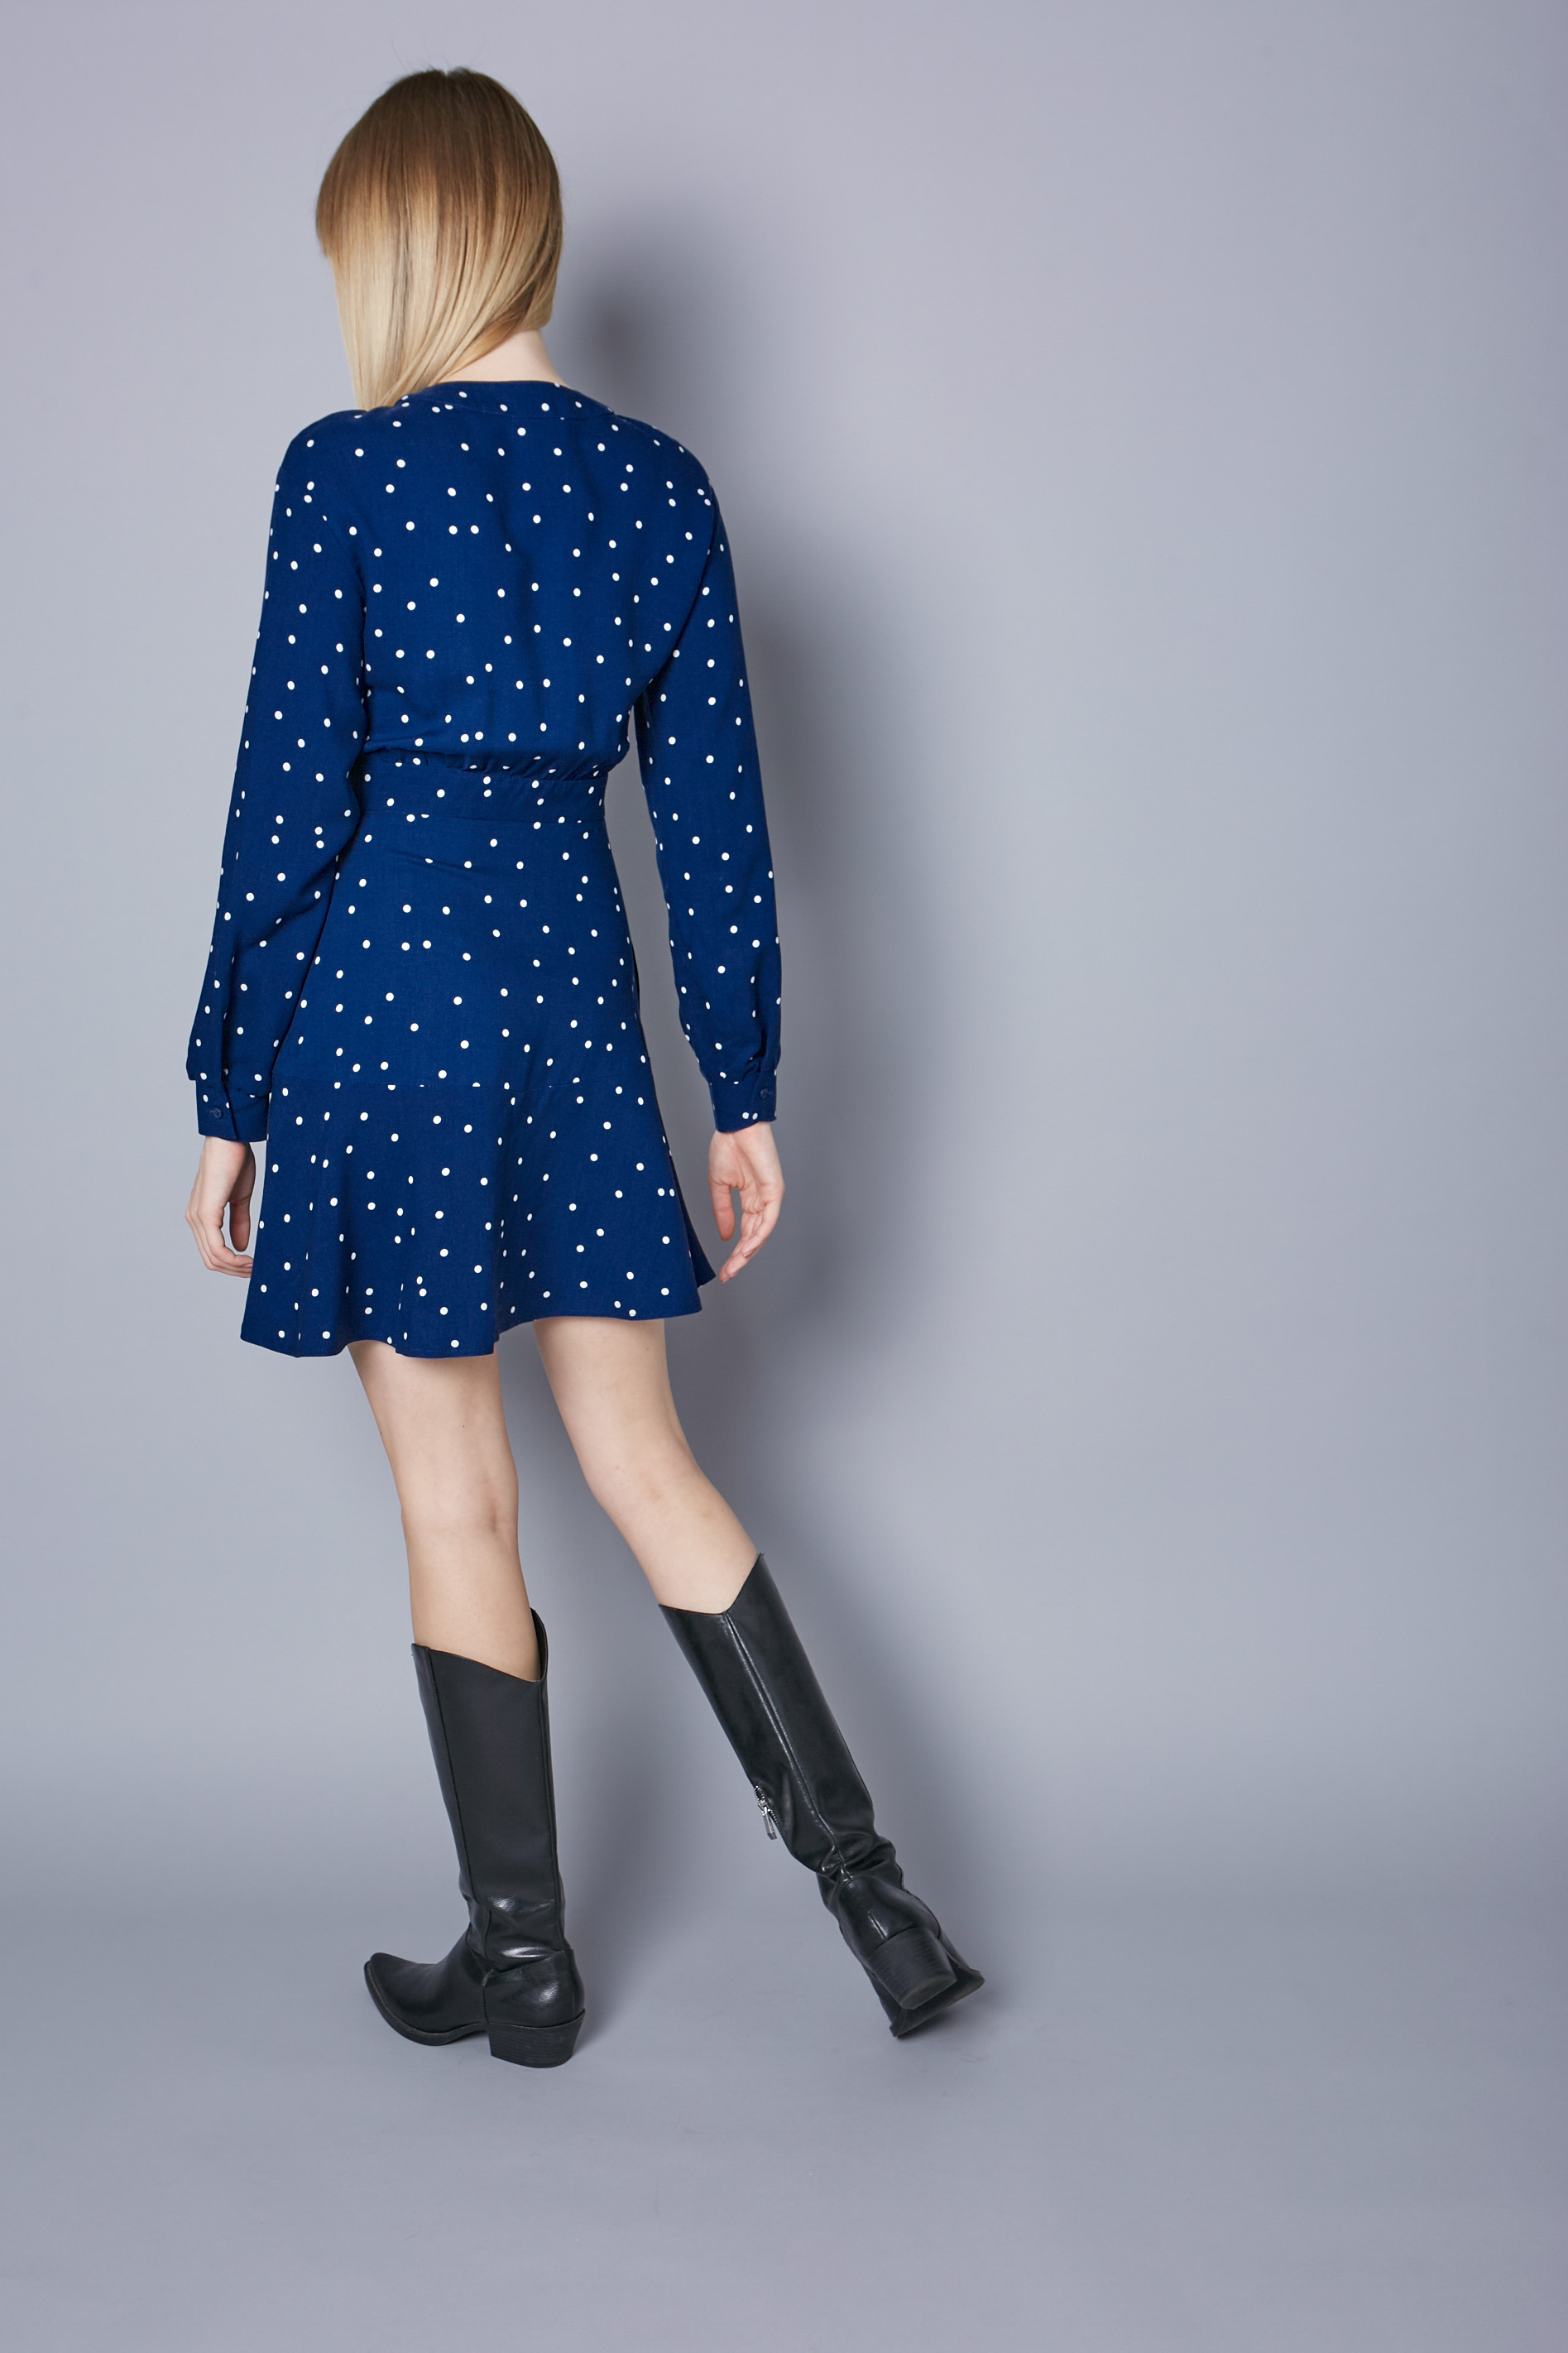 Short blue viscose dress with white polka dots, photo 3